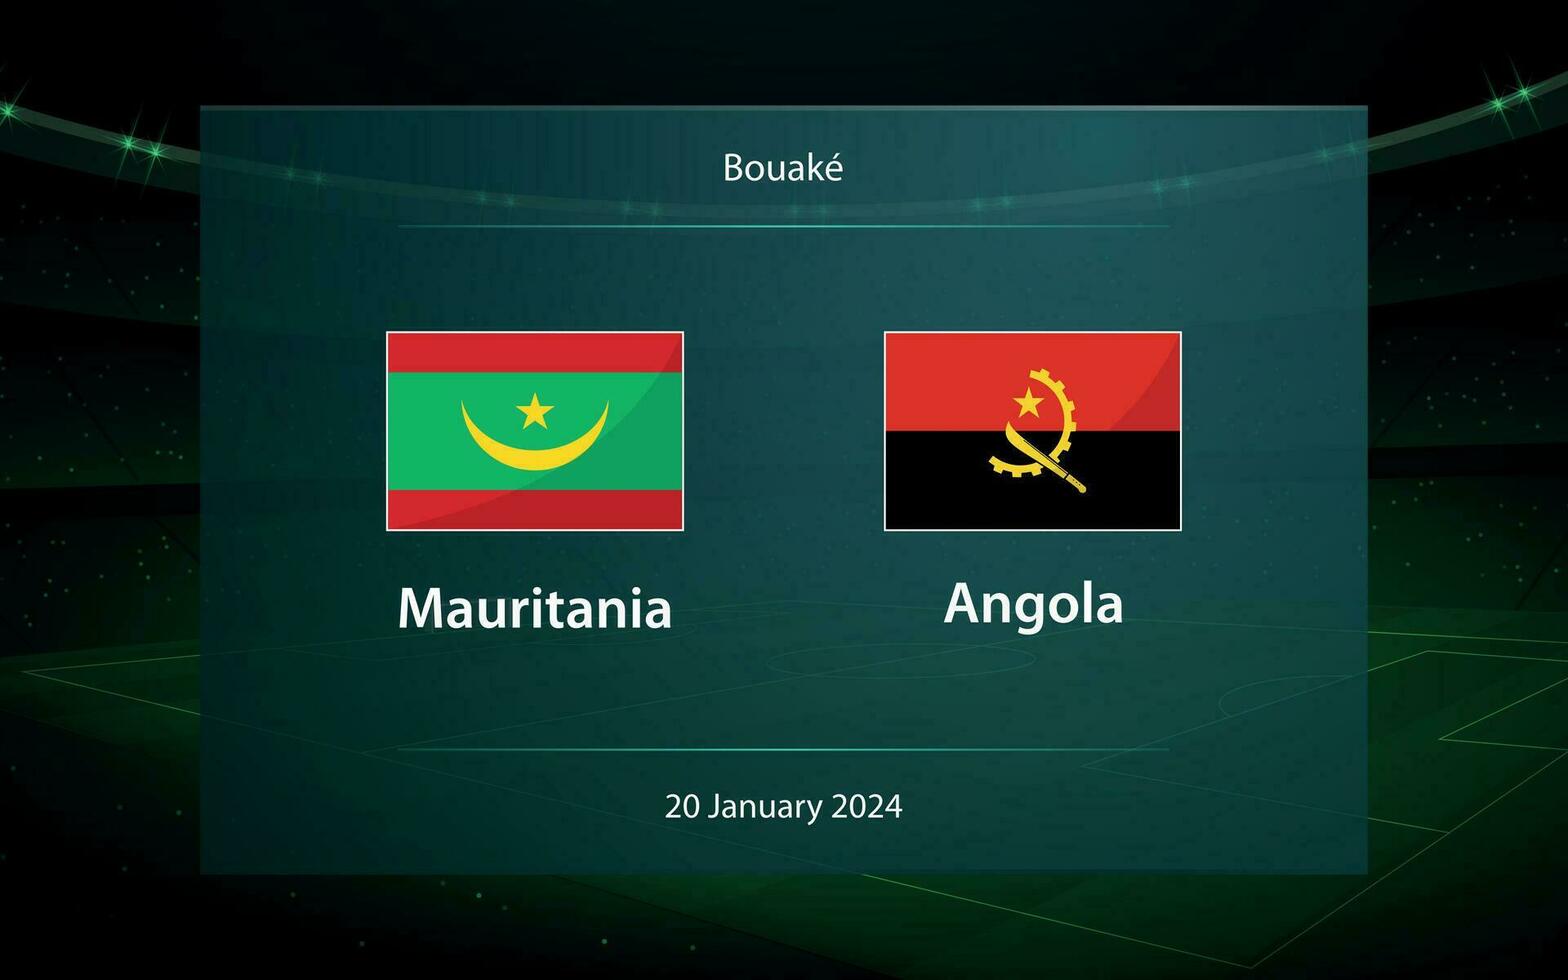 Mauritania vs Angola. Football scoreboard broadcast graphic vector